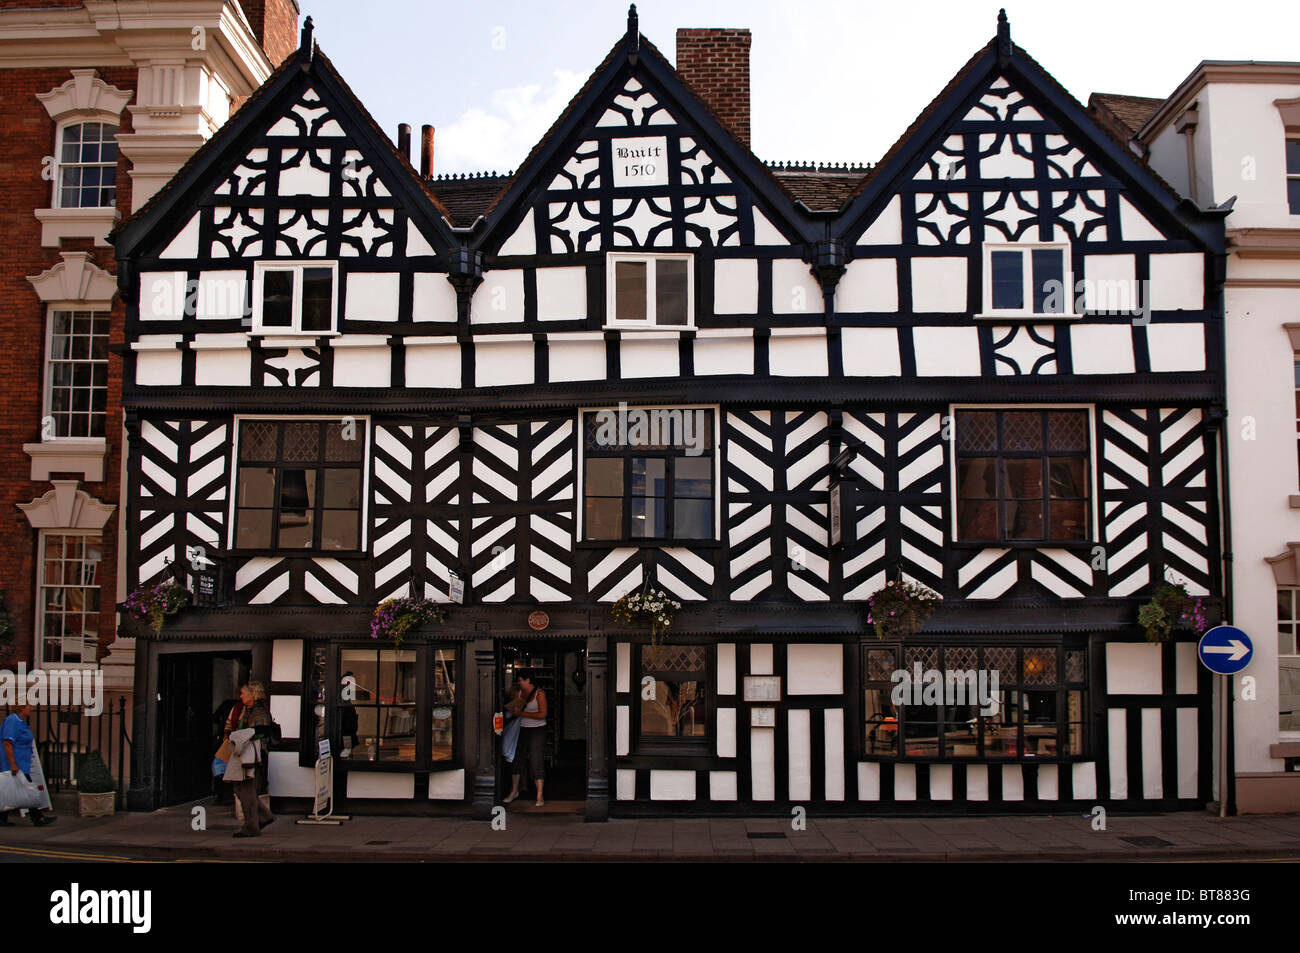 Old English maisons à colombages de style Tudor, avec ses magasins, Lichfield, Angleterre, Europe Banque D'Images